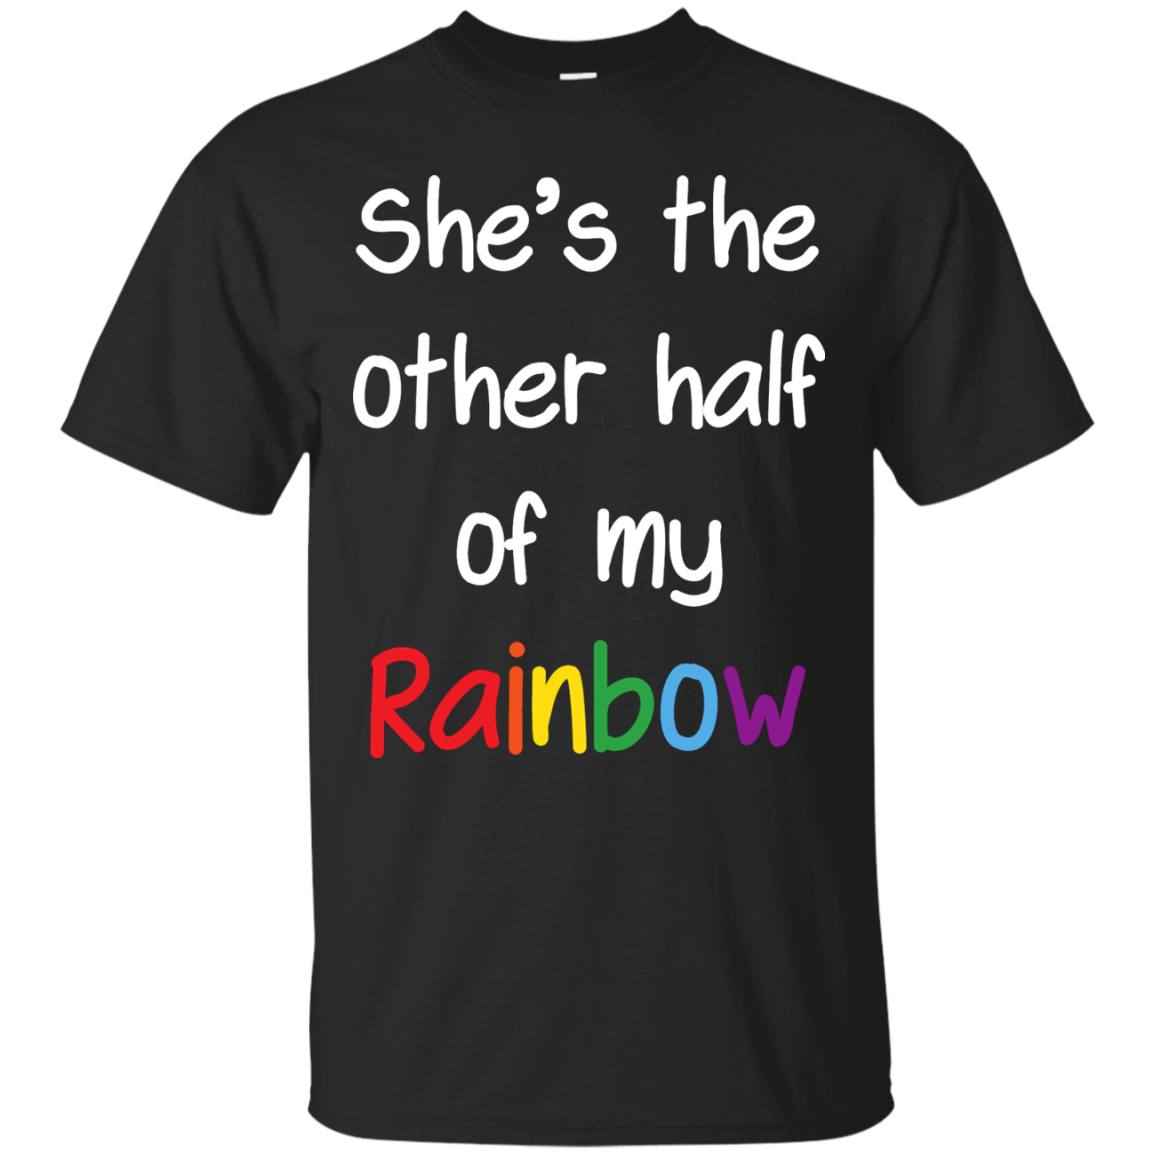 Rainbow couple tshirt black color